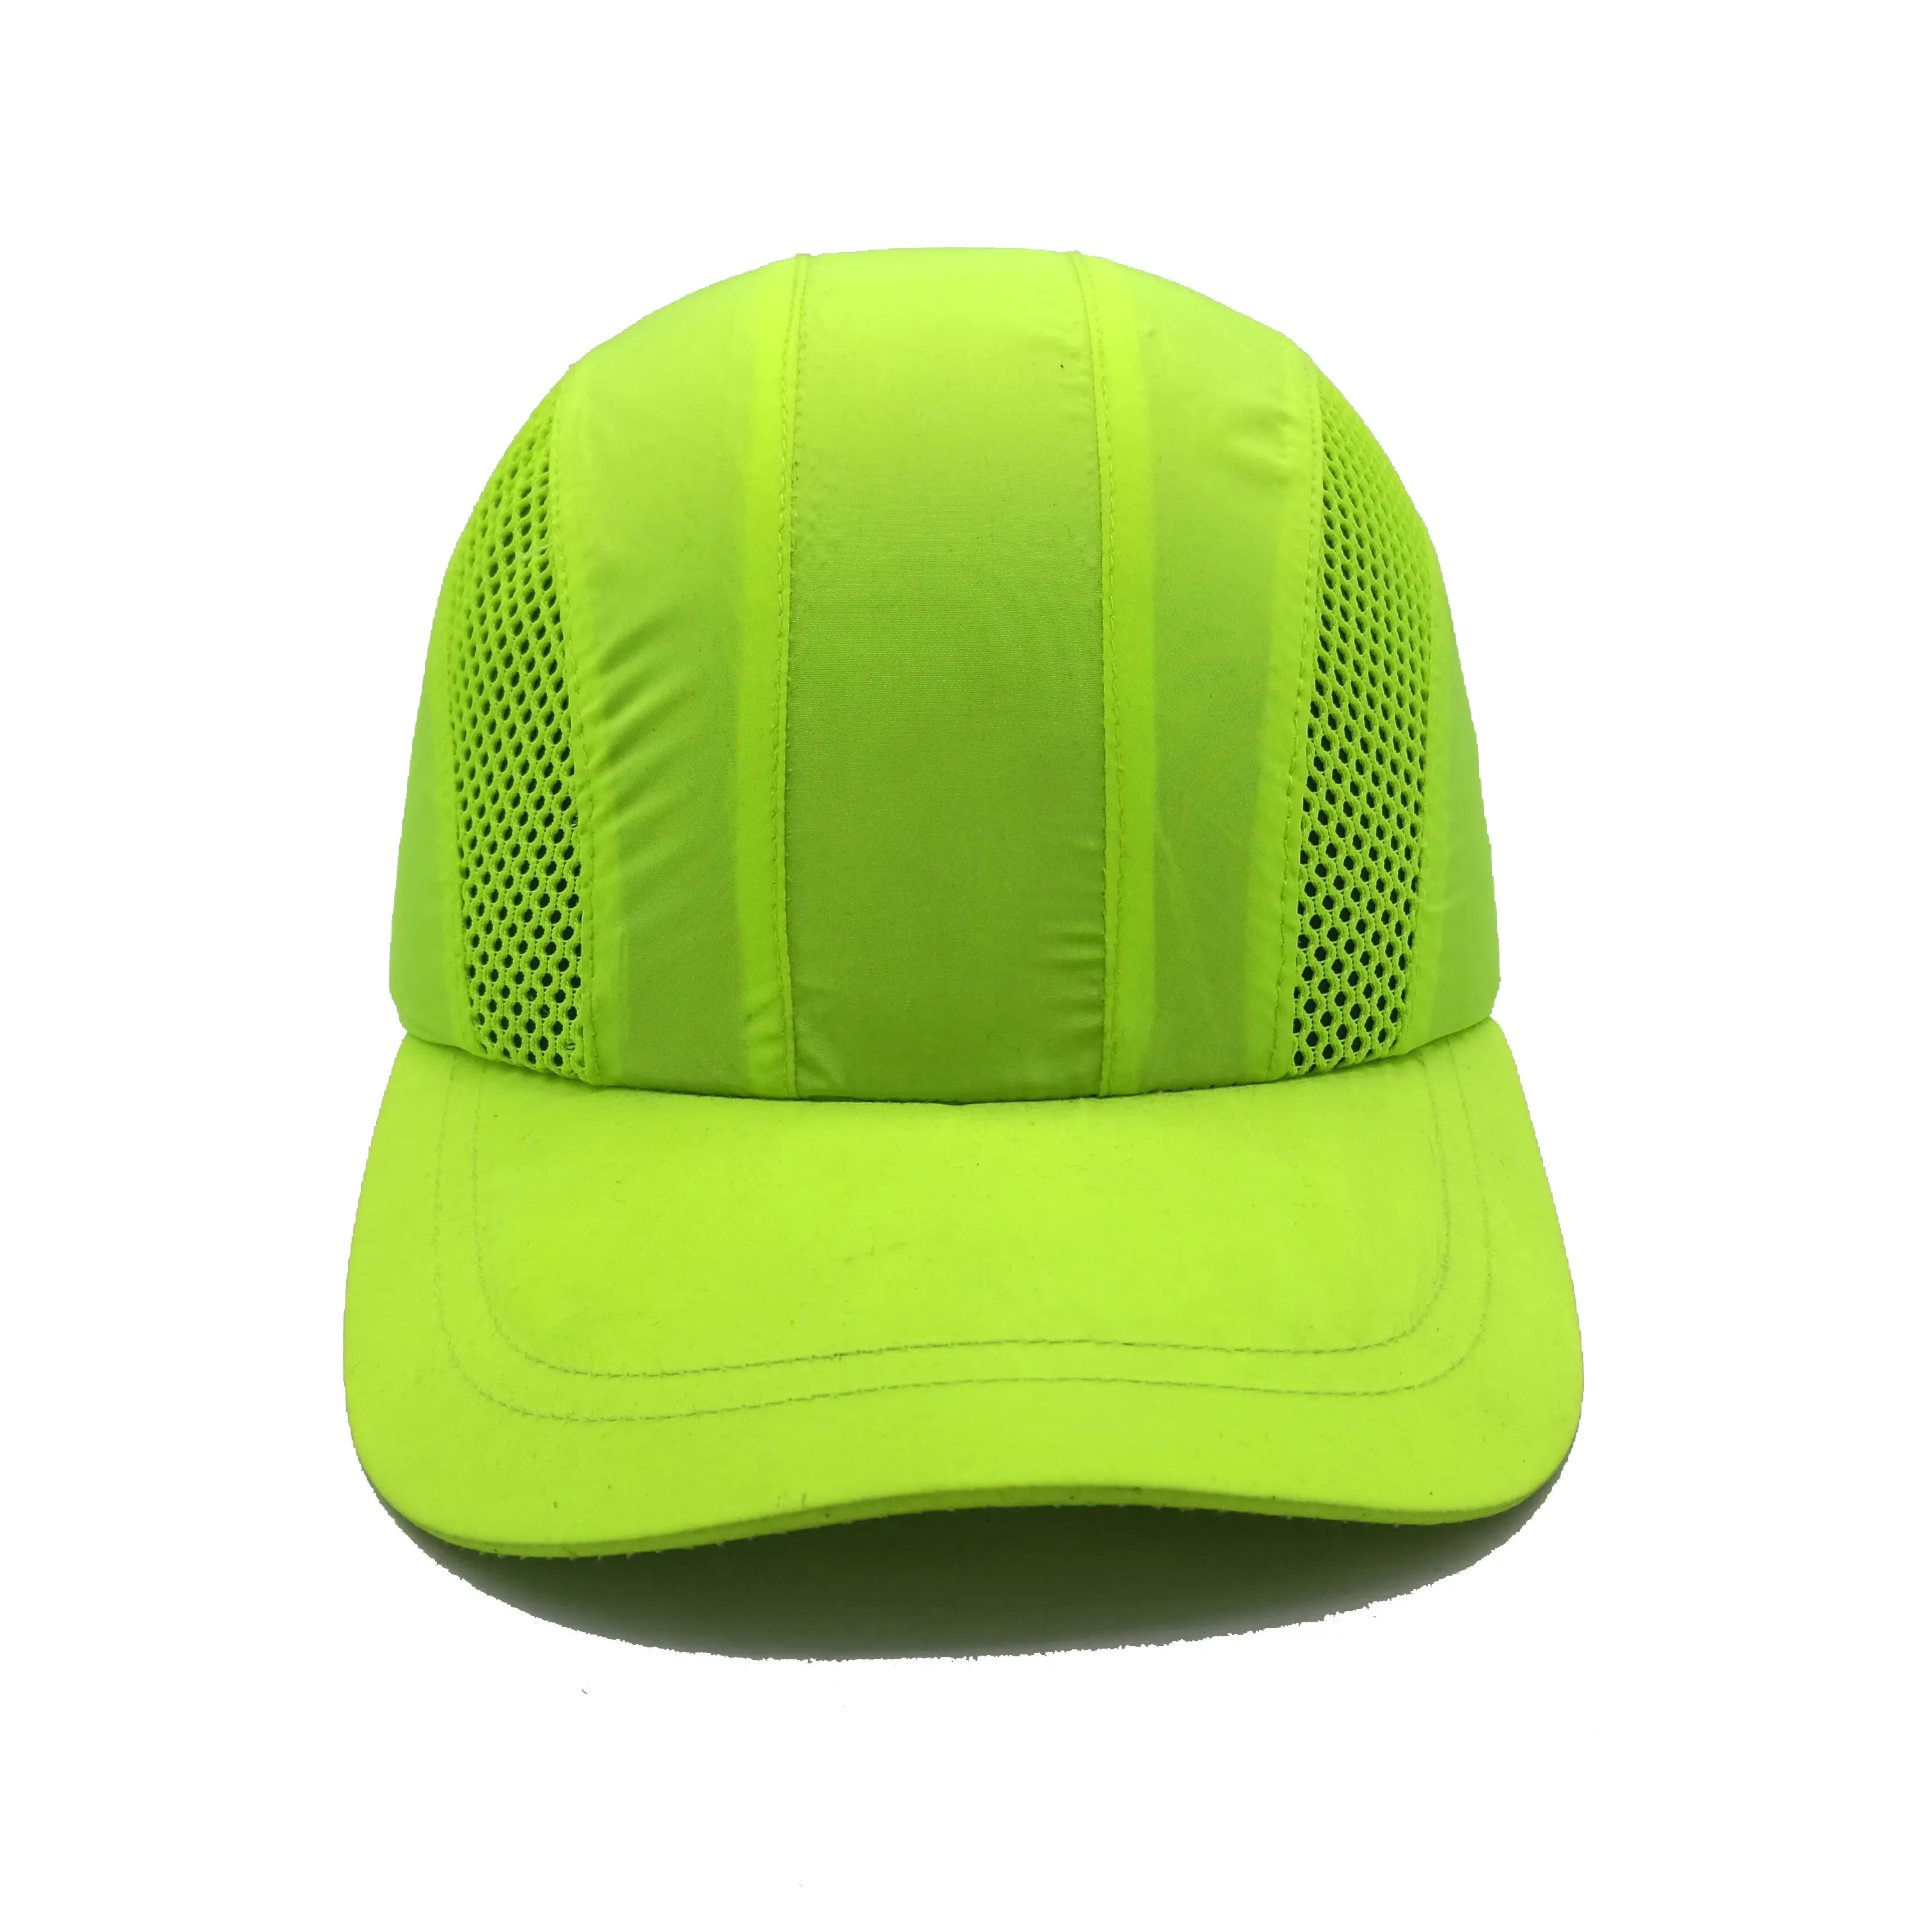 head protection baseball bump cap,safety Helmet Hard Hat